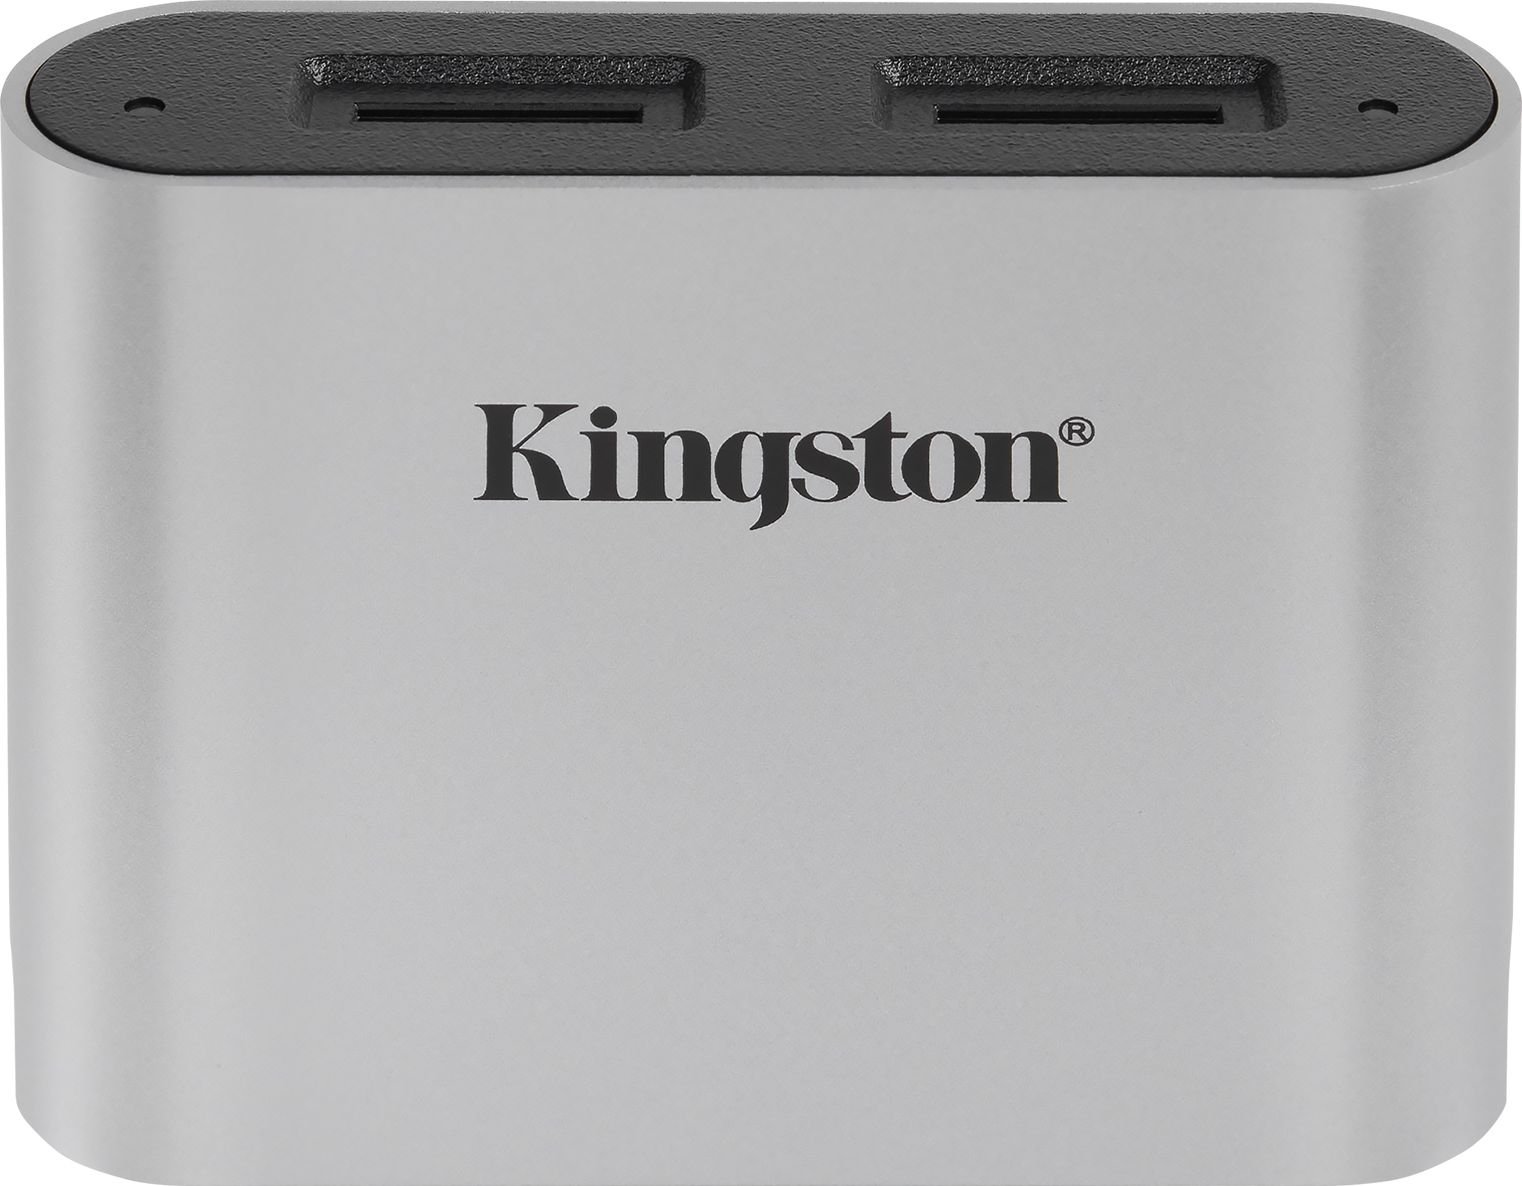 Card reader - Accesoriu Kingston Workflow Station Card Reader Dual-Slot, microSDHC si SDXC UHS-II, USB3.2 Gen1